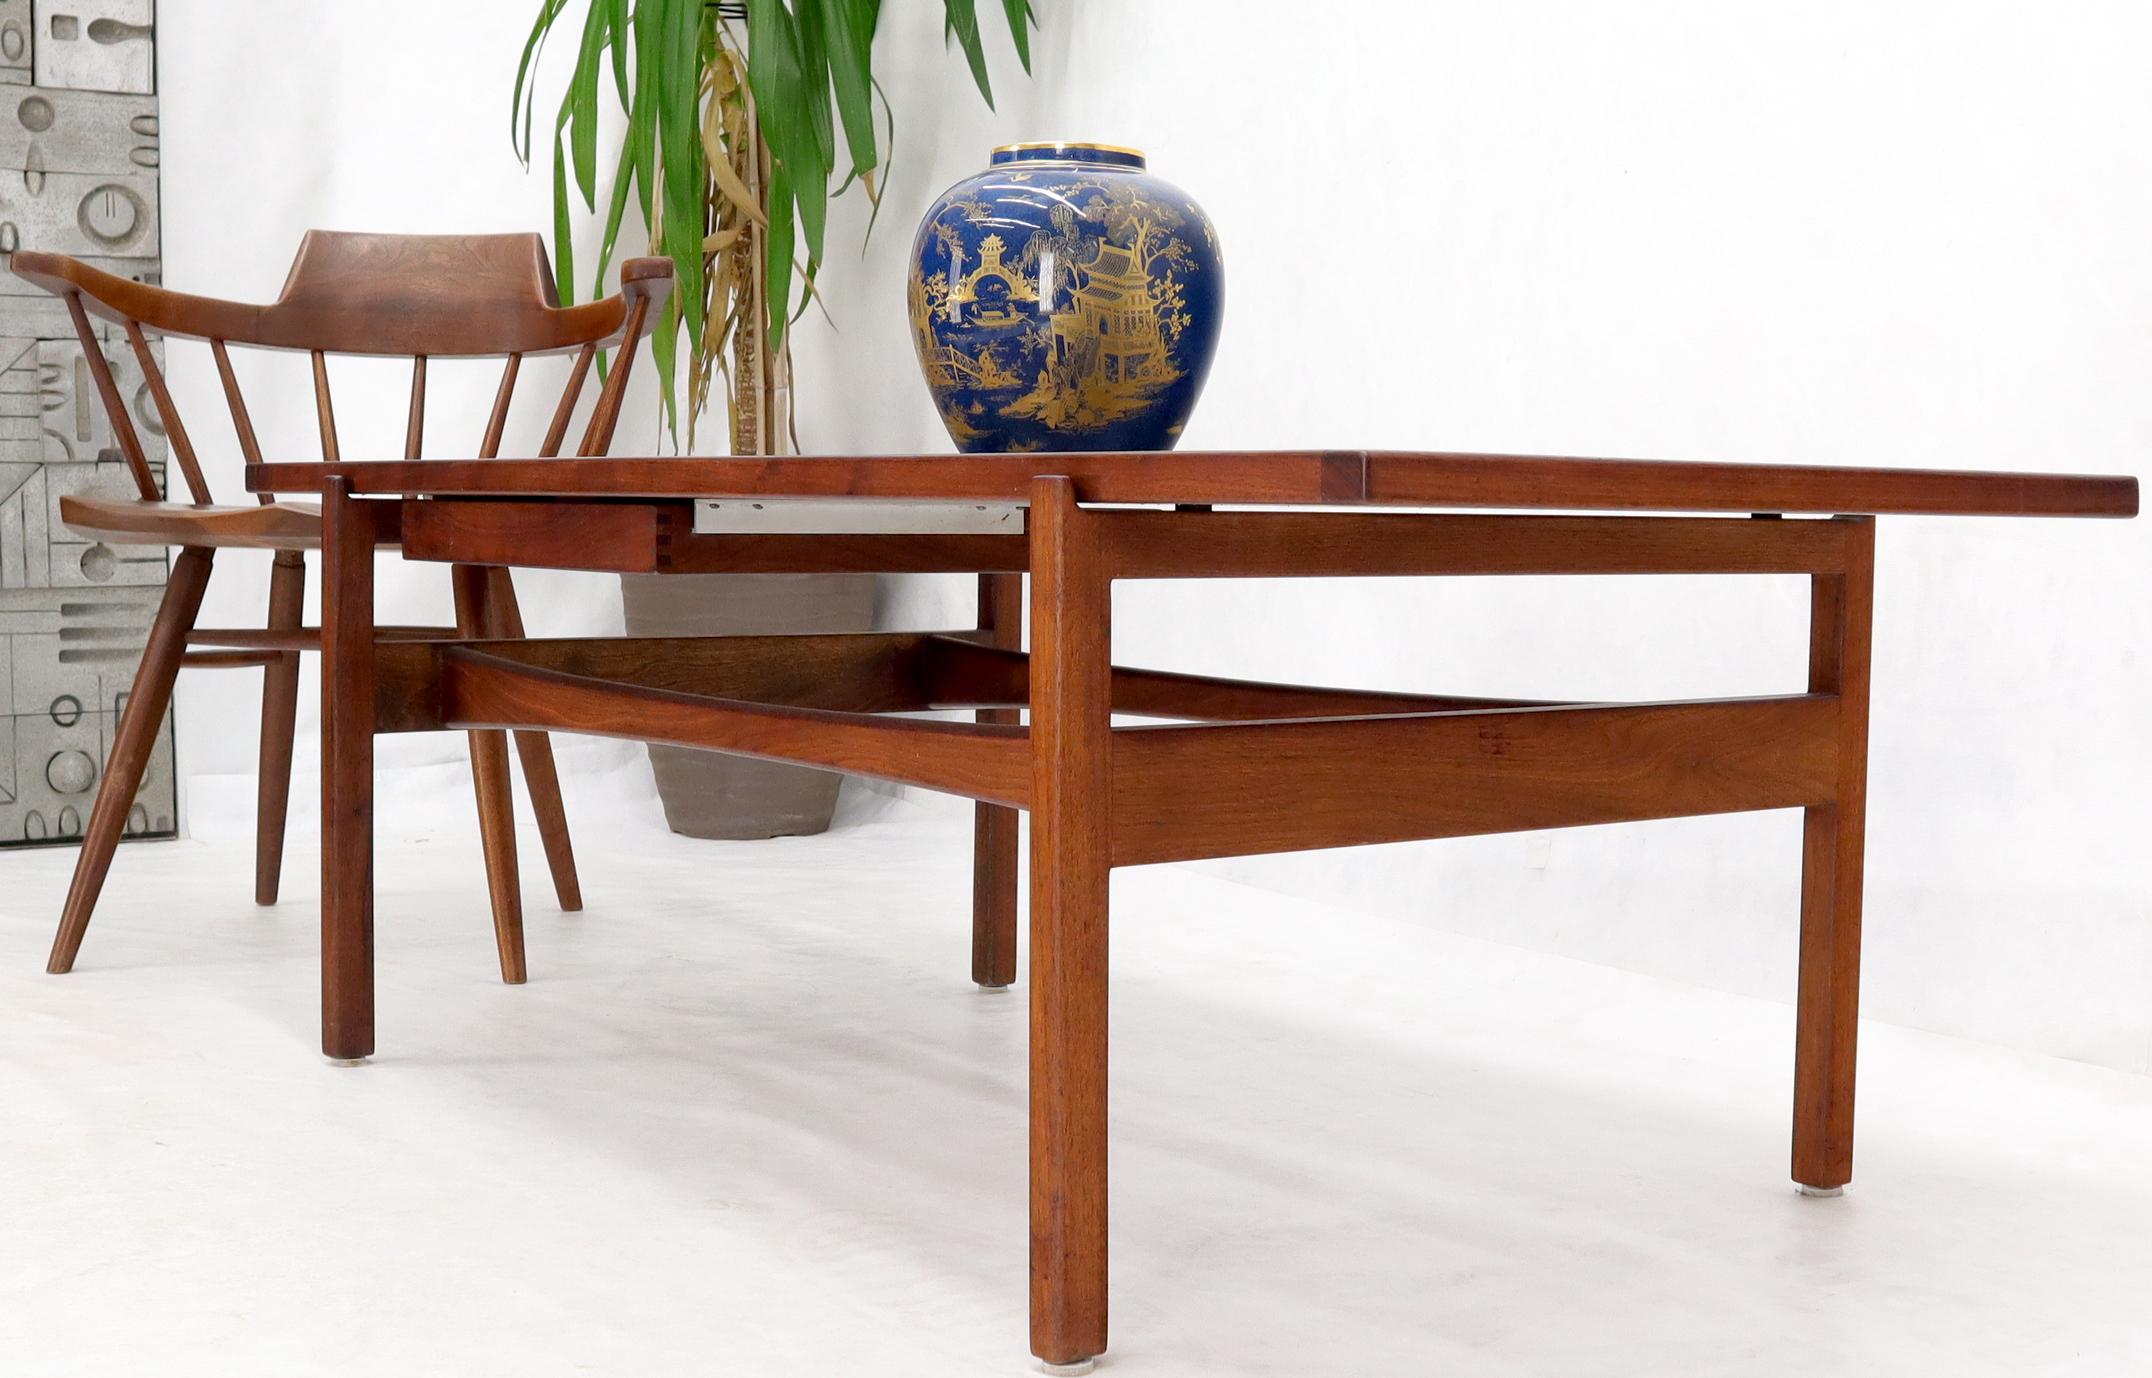 20th Century One Drawer Rectangle Shape Teak Danish Mid-Century Modern Coffee Table For Sale